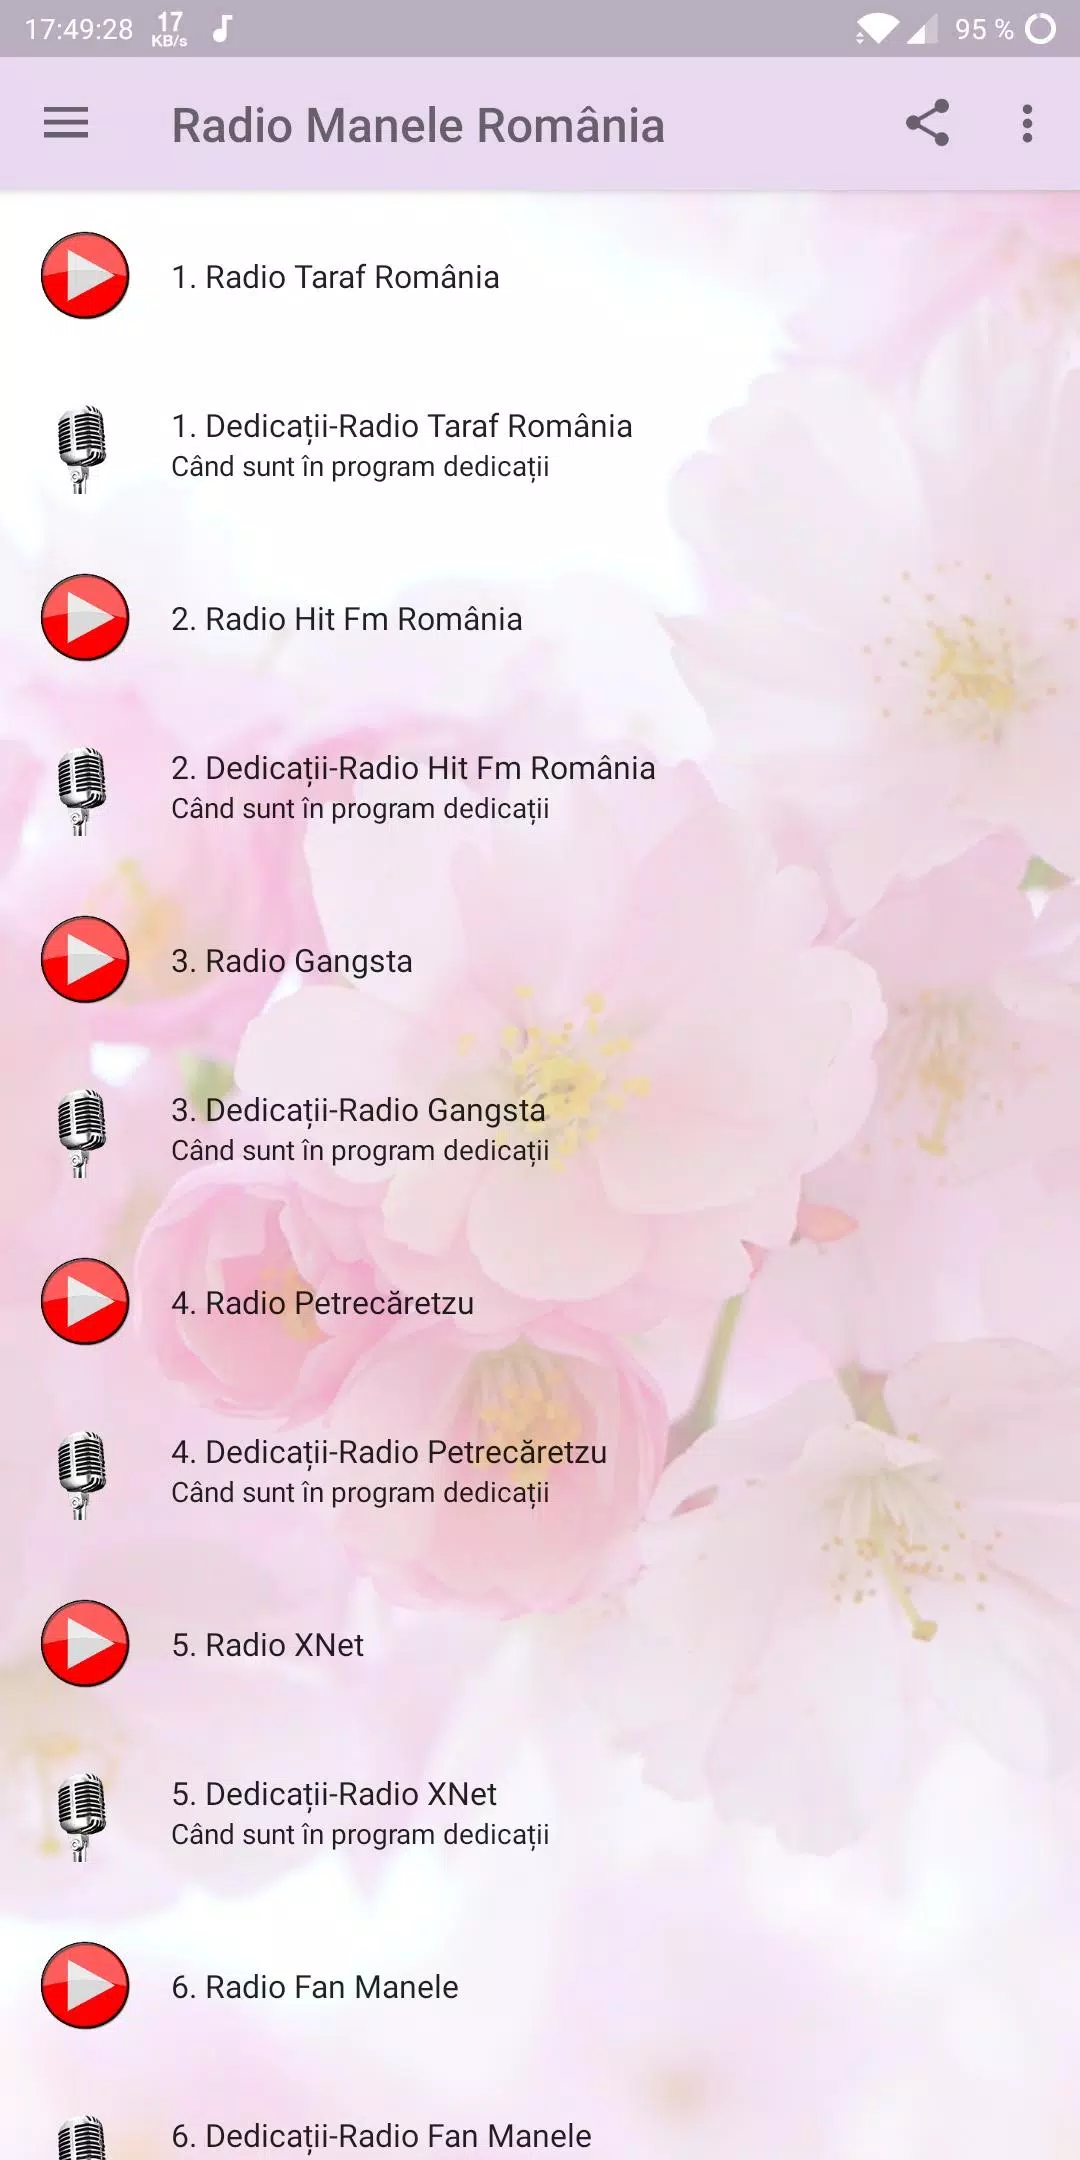 Radio Manele România for Android - APK Download